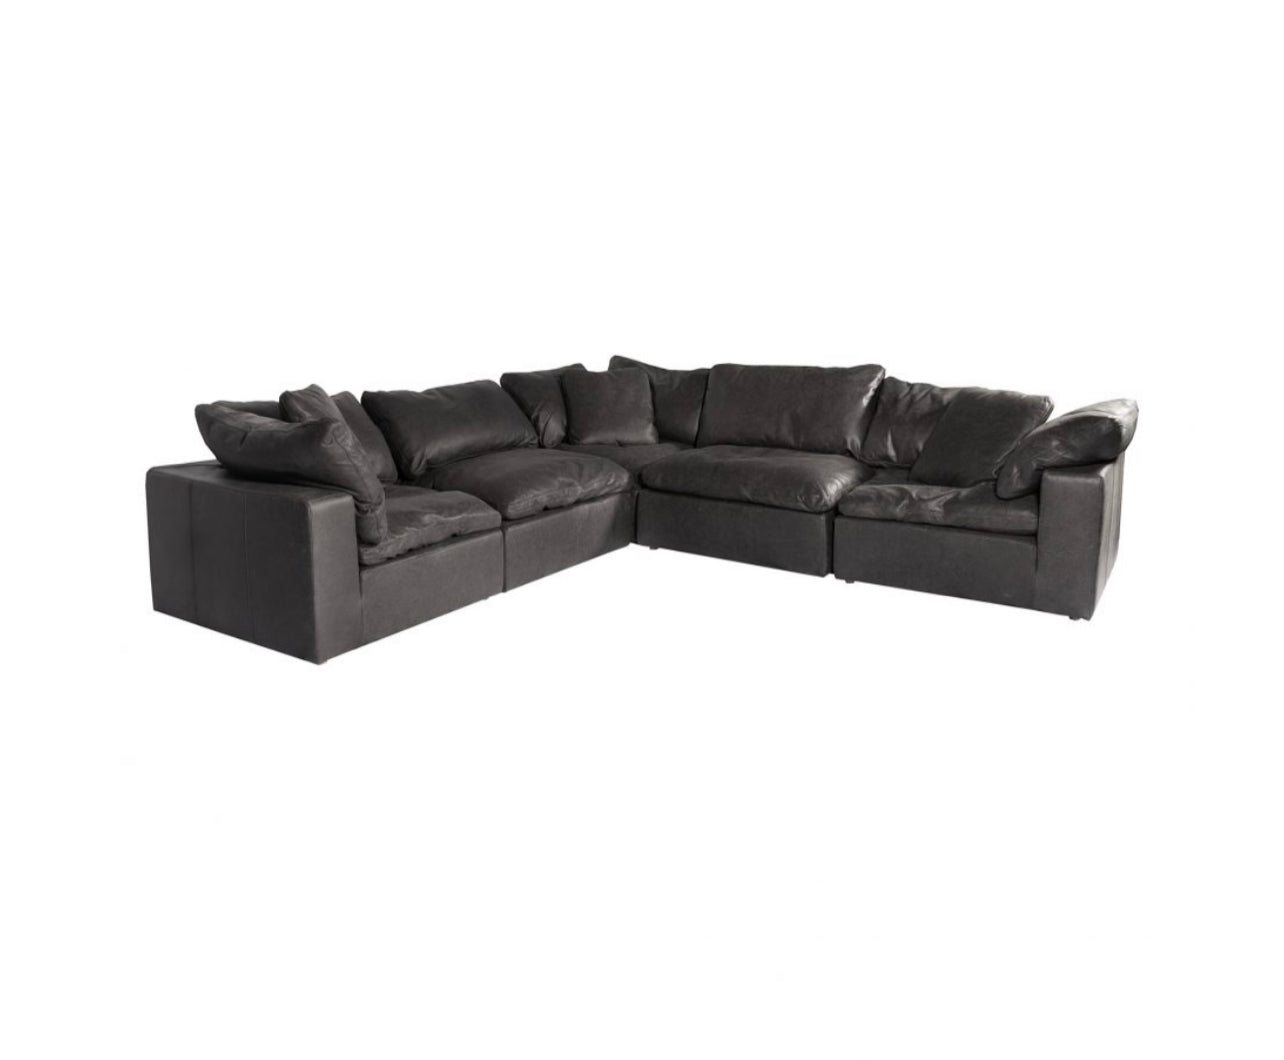 Classic Leather Sectional Modular Sofa